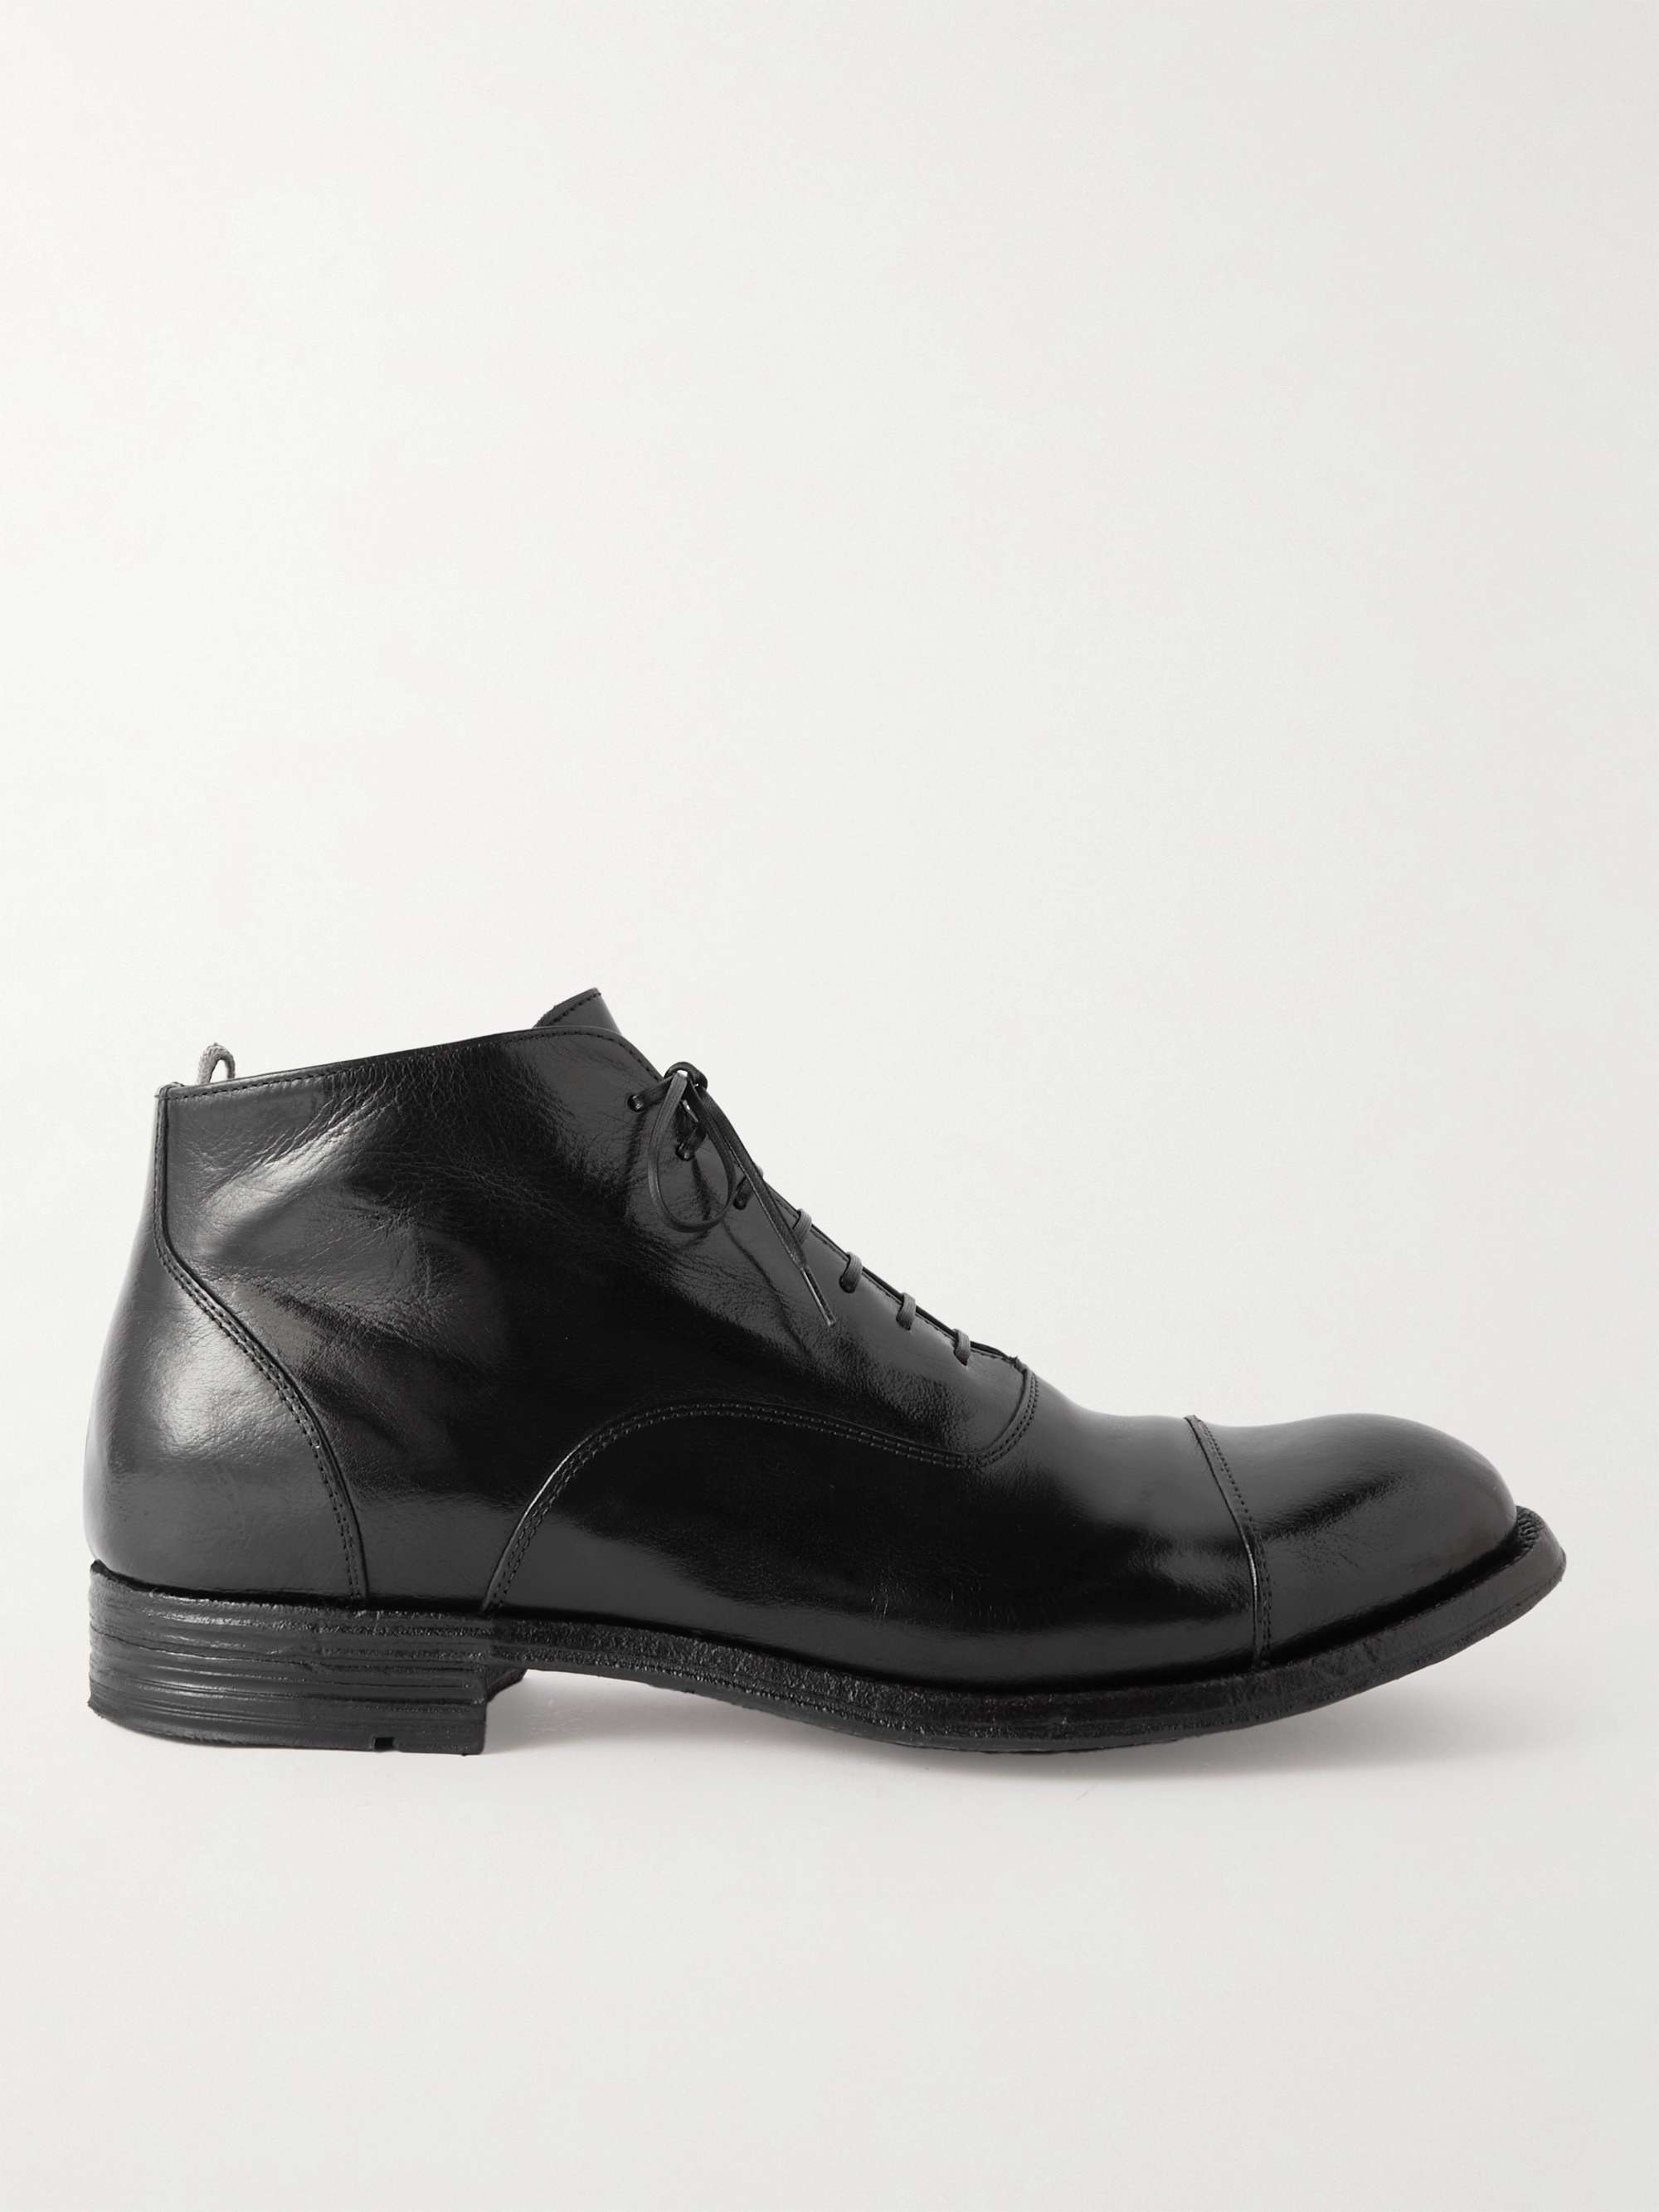 OFFICINE CREATIVE 009 Leather Boots for Men | MR PORTER